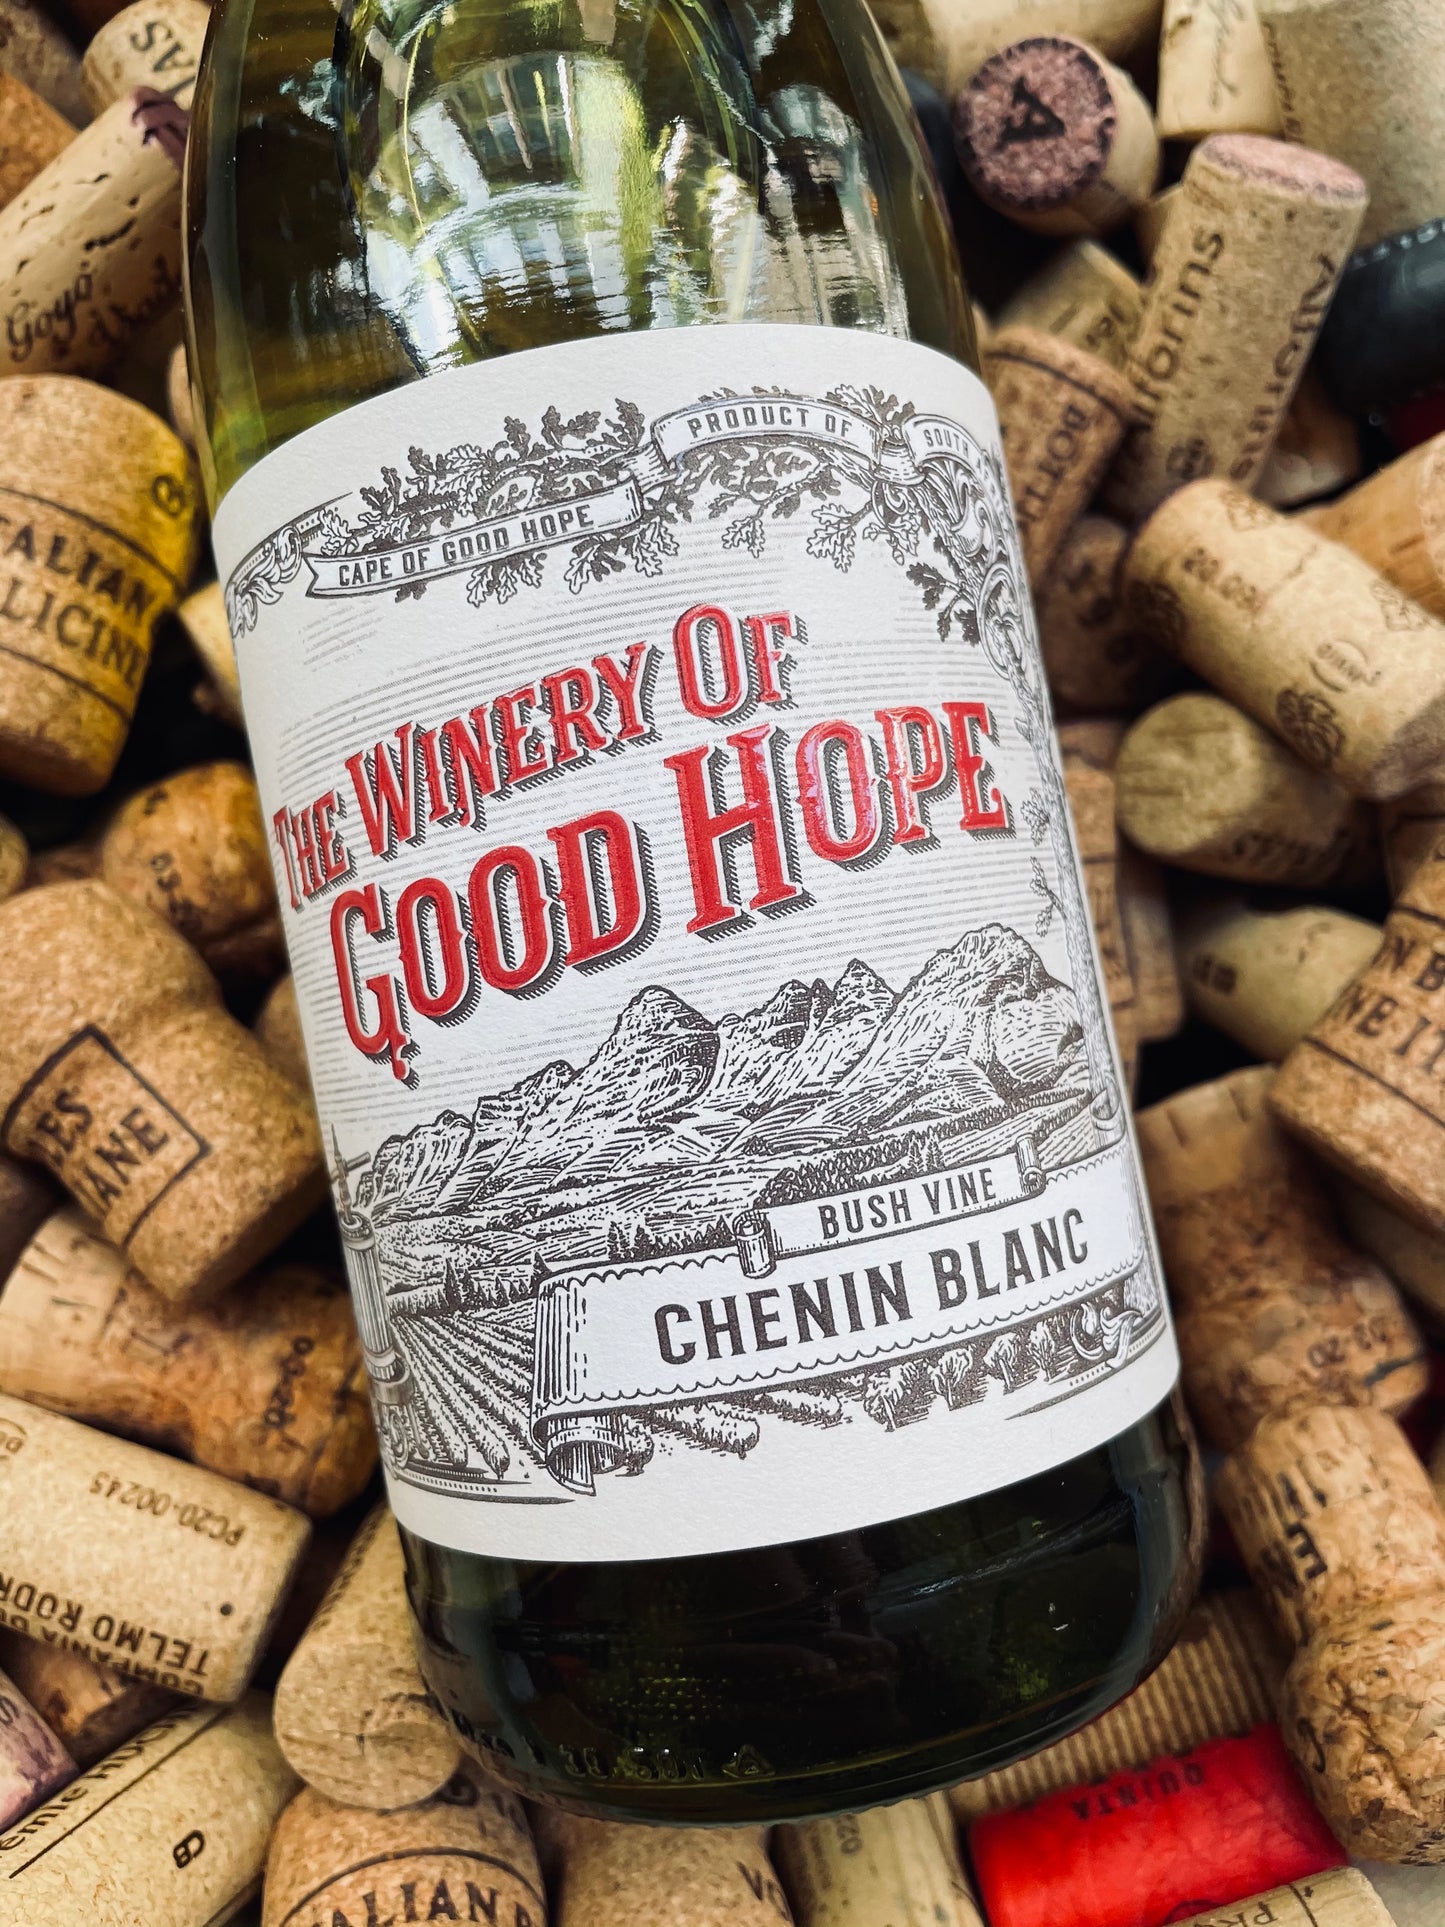 Winery of Good Hope Bush Vine Chenin Blanc